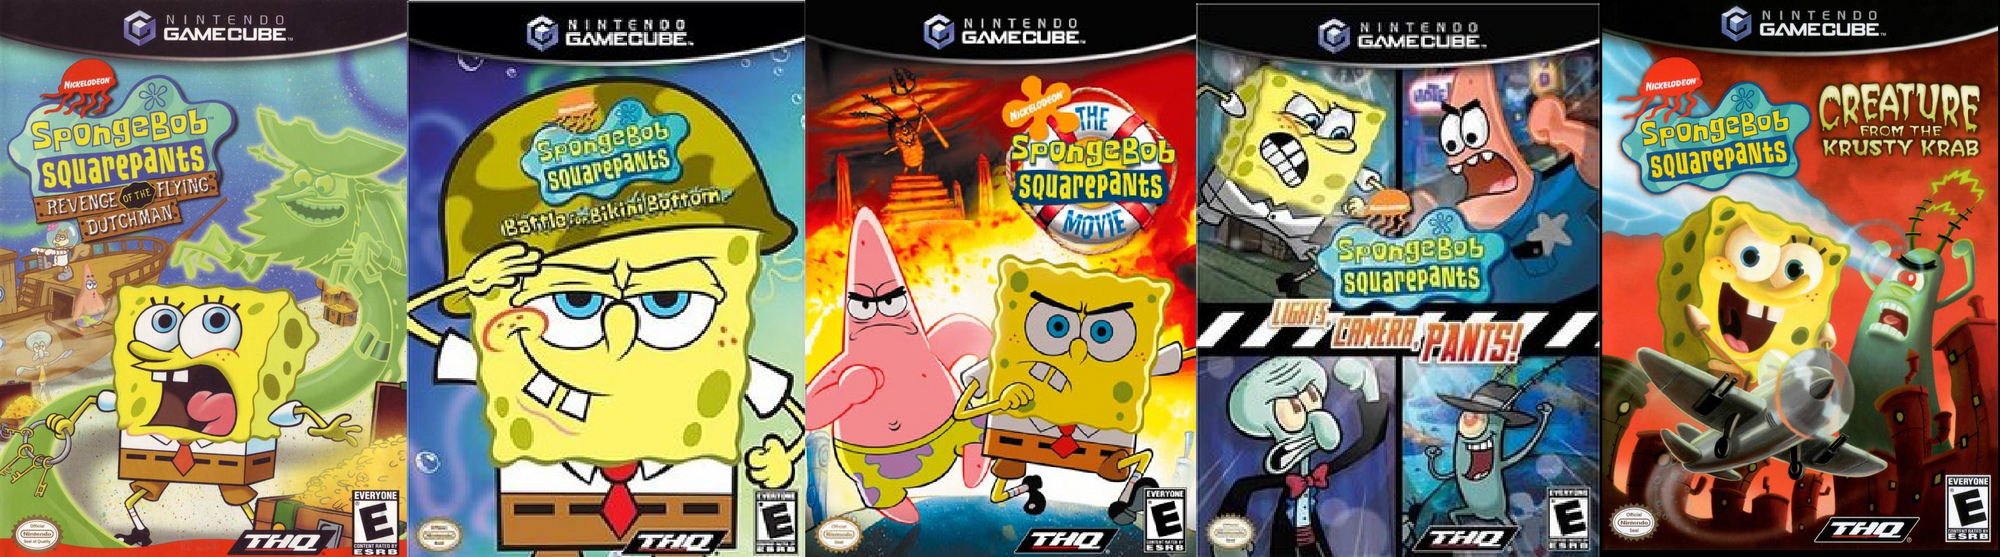 Image Spongebob gamecube games.png Encyclopedia SpongeBobia